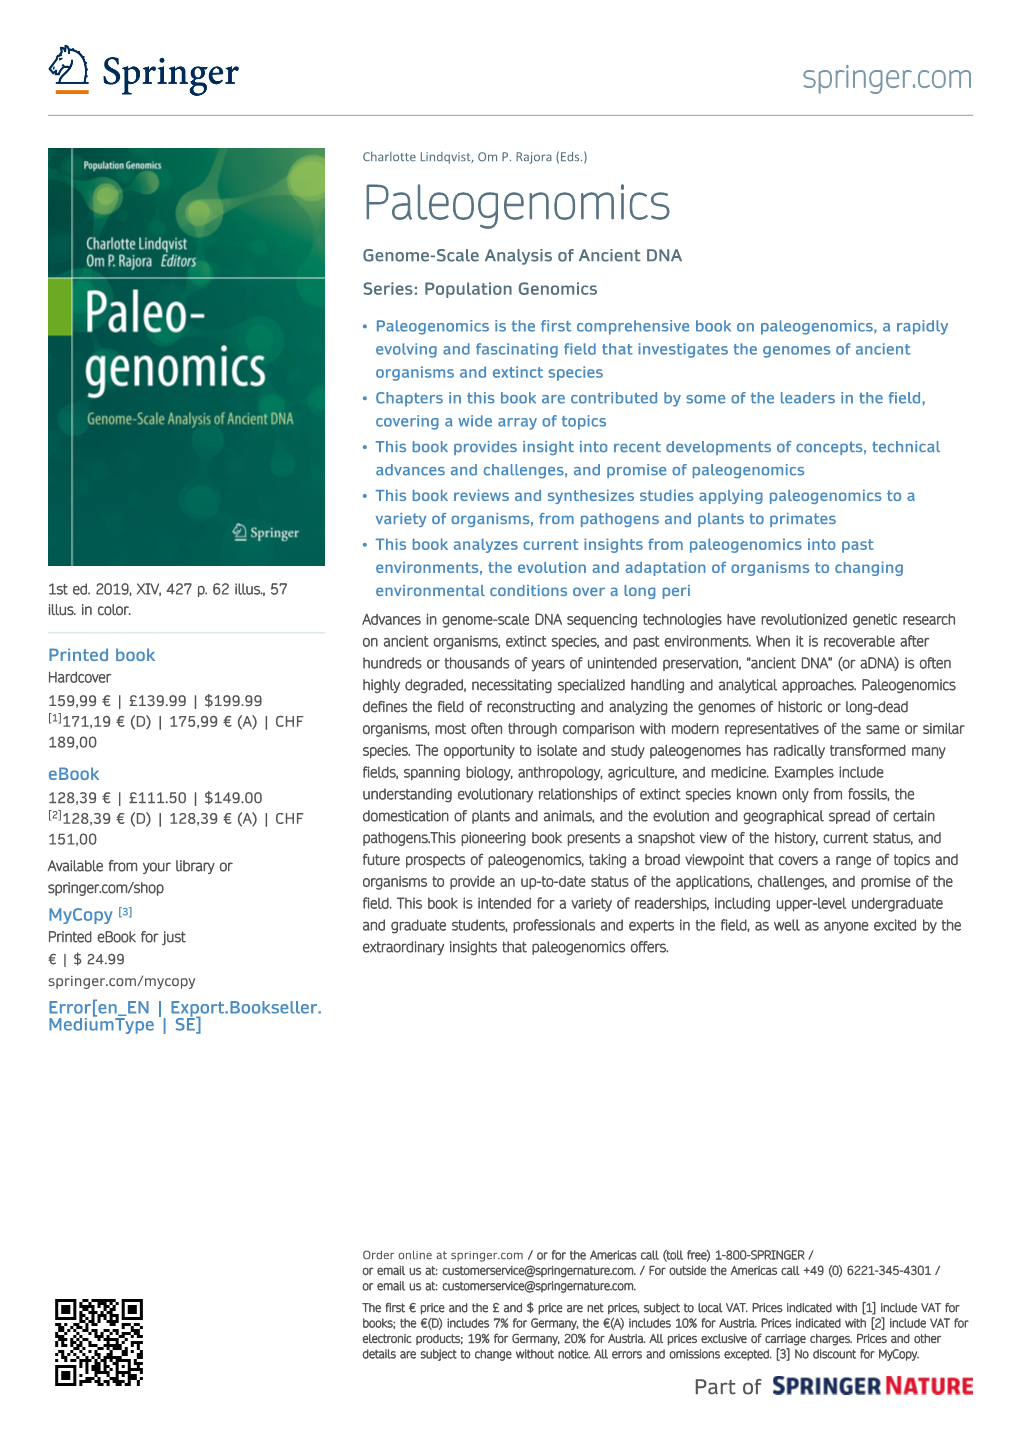 Paleogenomics Genome-Scale Analysis of Ancient DNA Series: Population Genomics